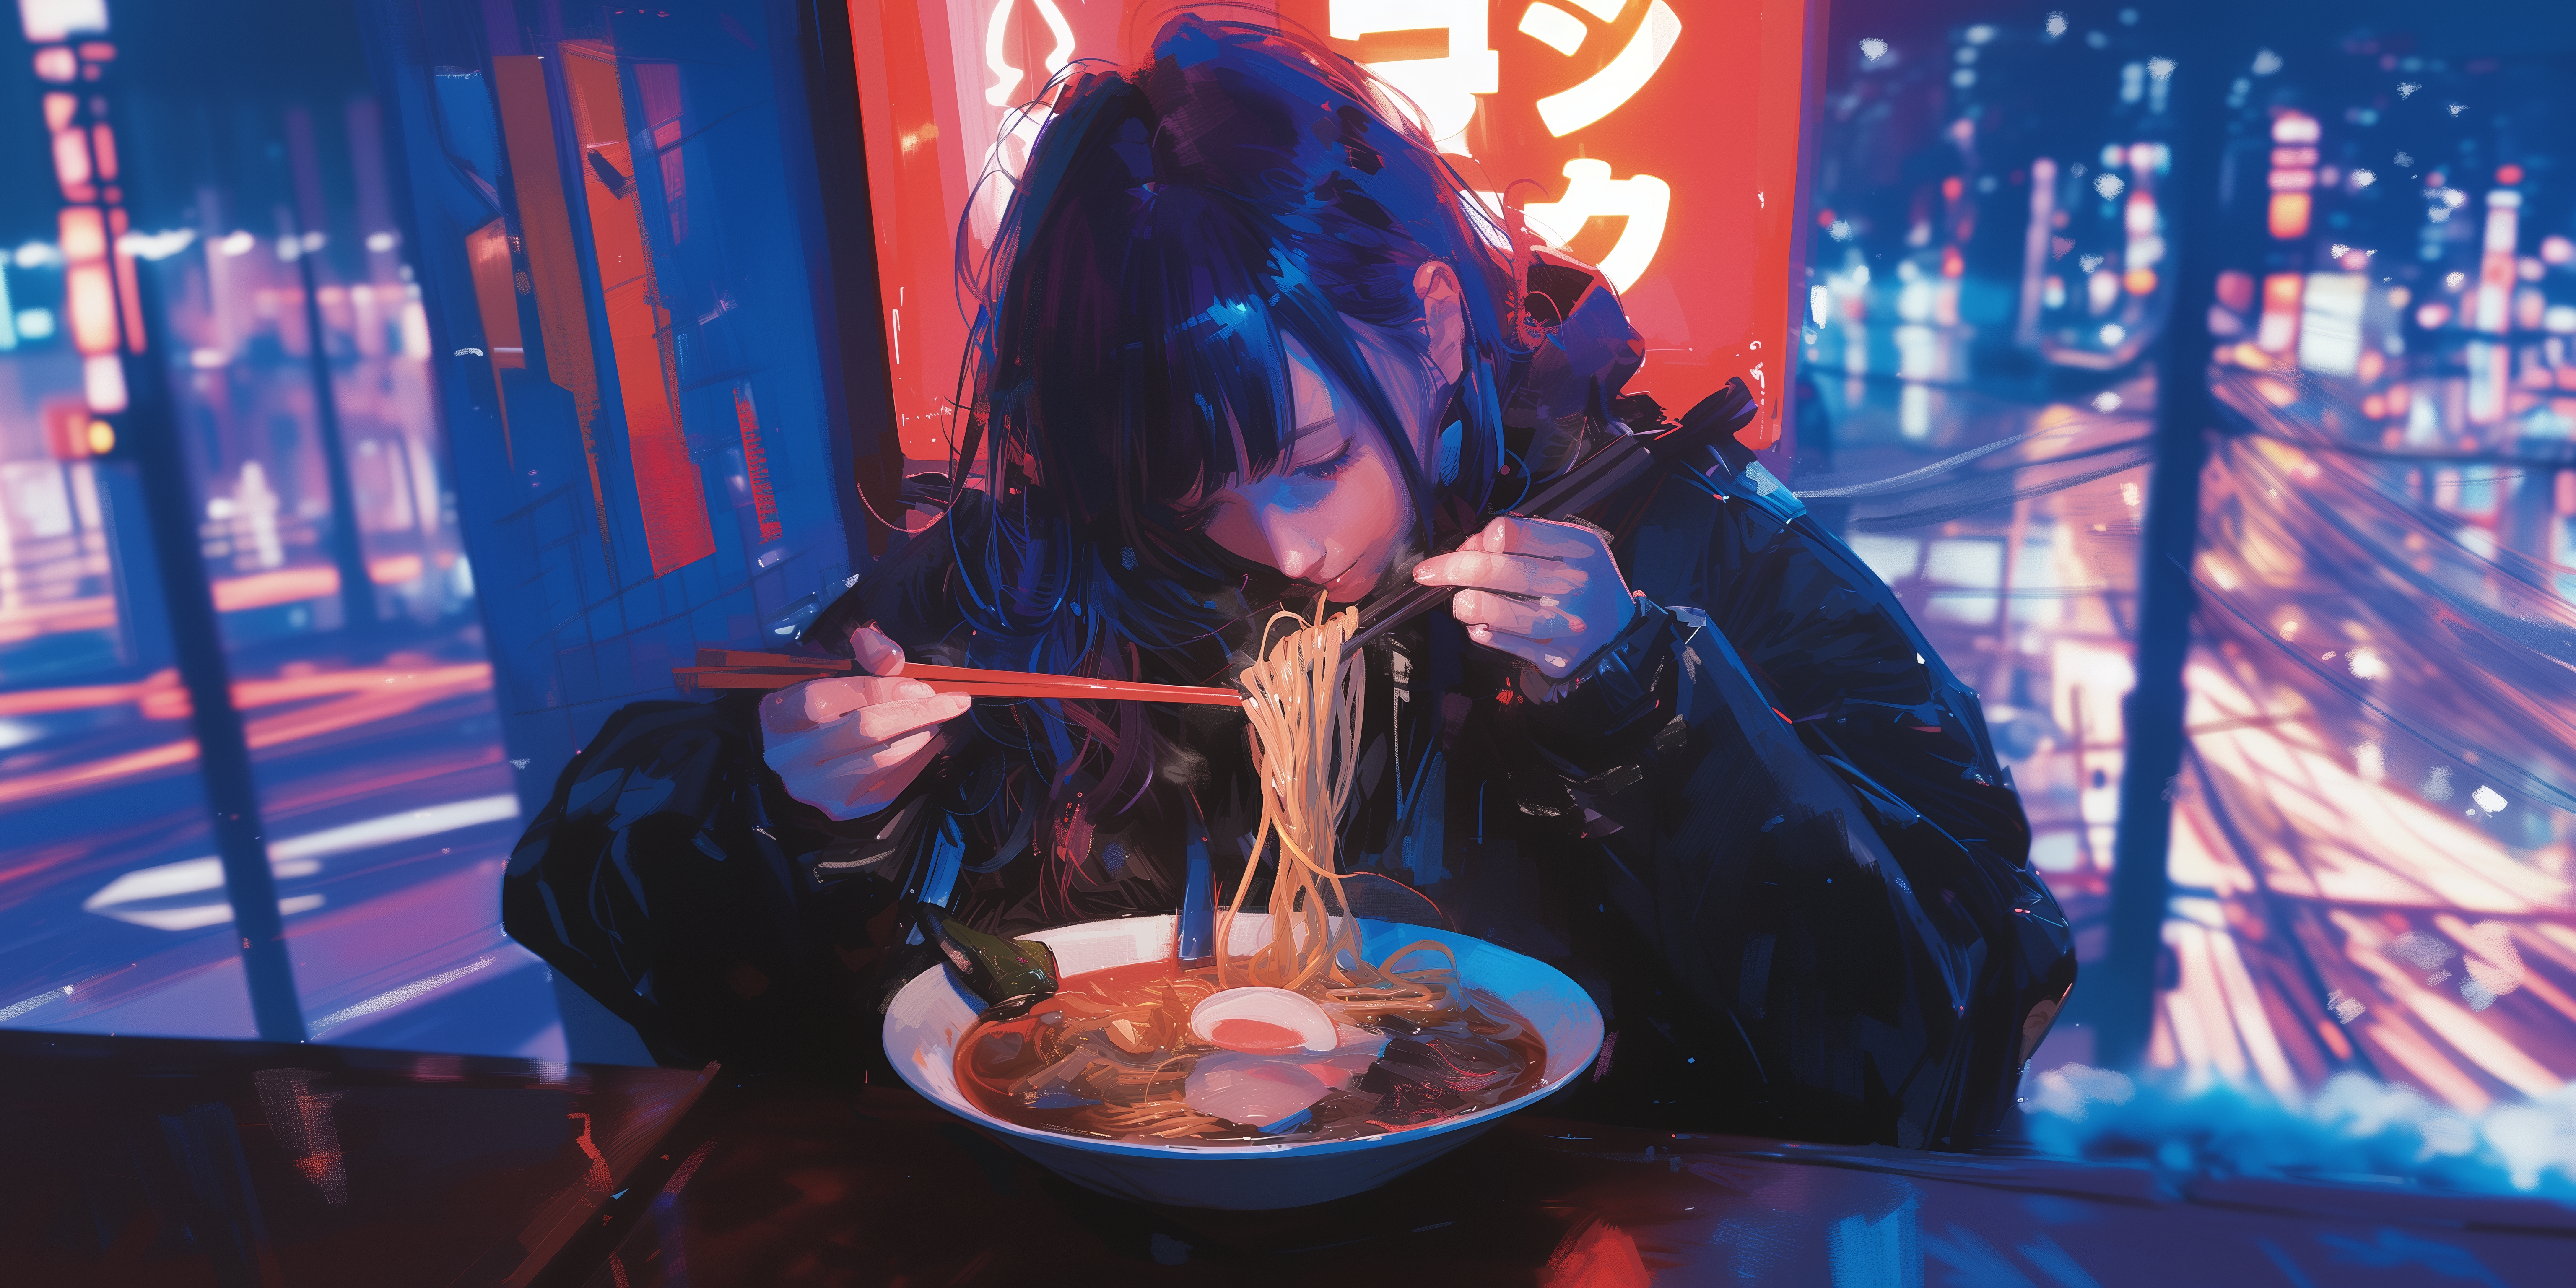 Anime 6144x3072 AI art illustration women eating noodles blue city painting chopsticks food bowls sitting long hair city lights long sleeves jacket ramen signs lights